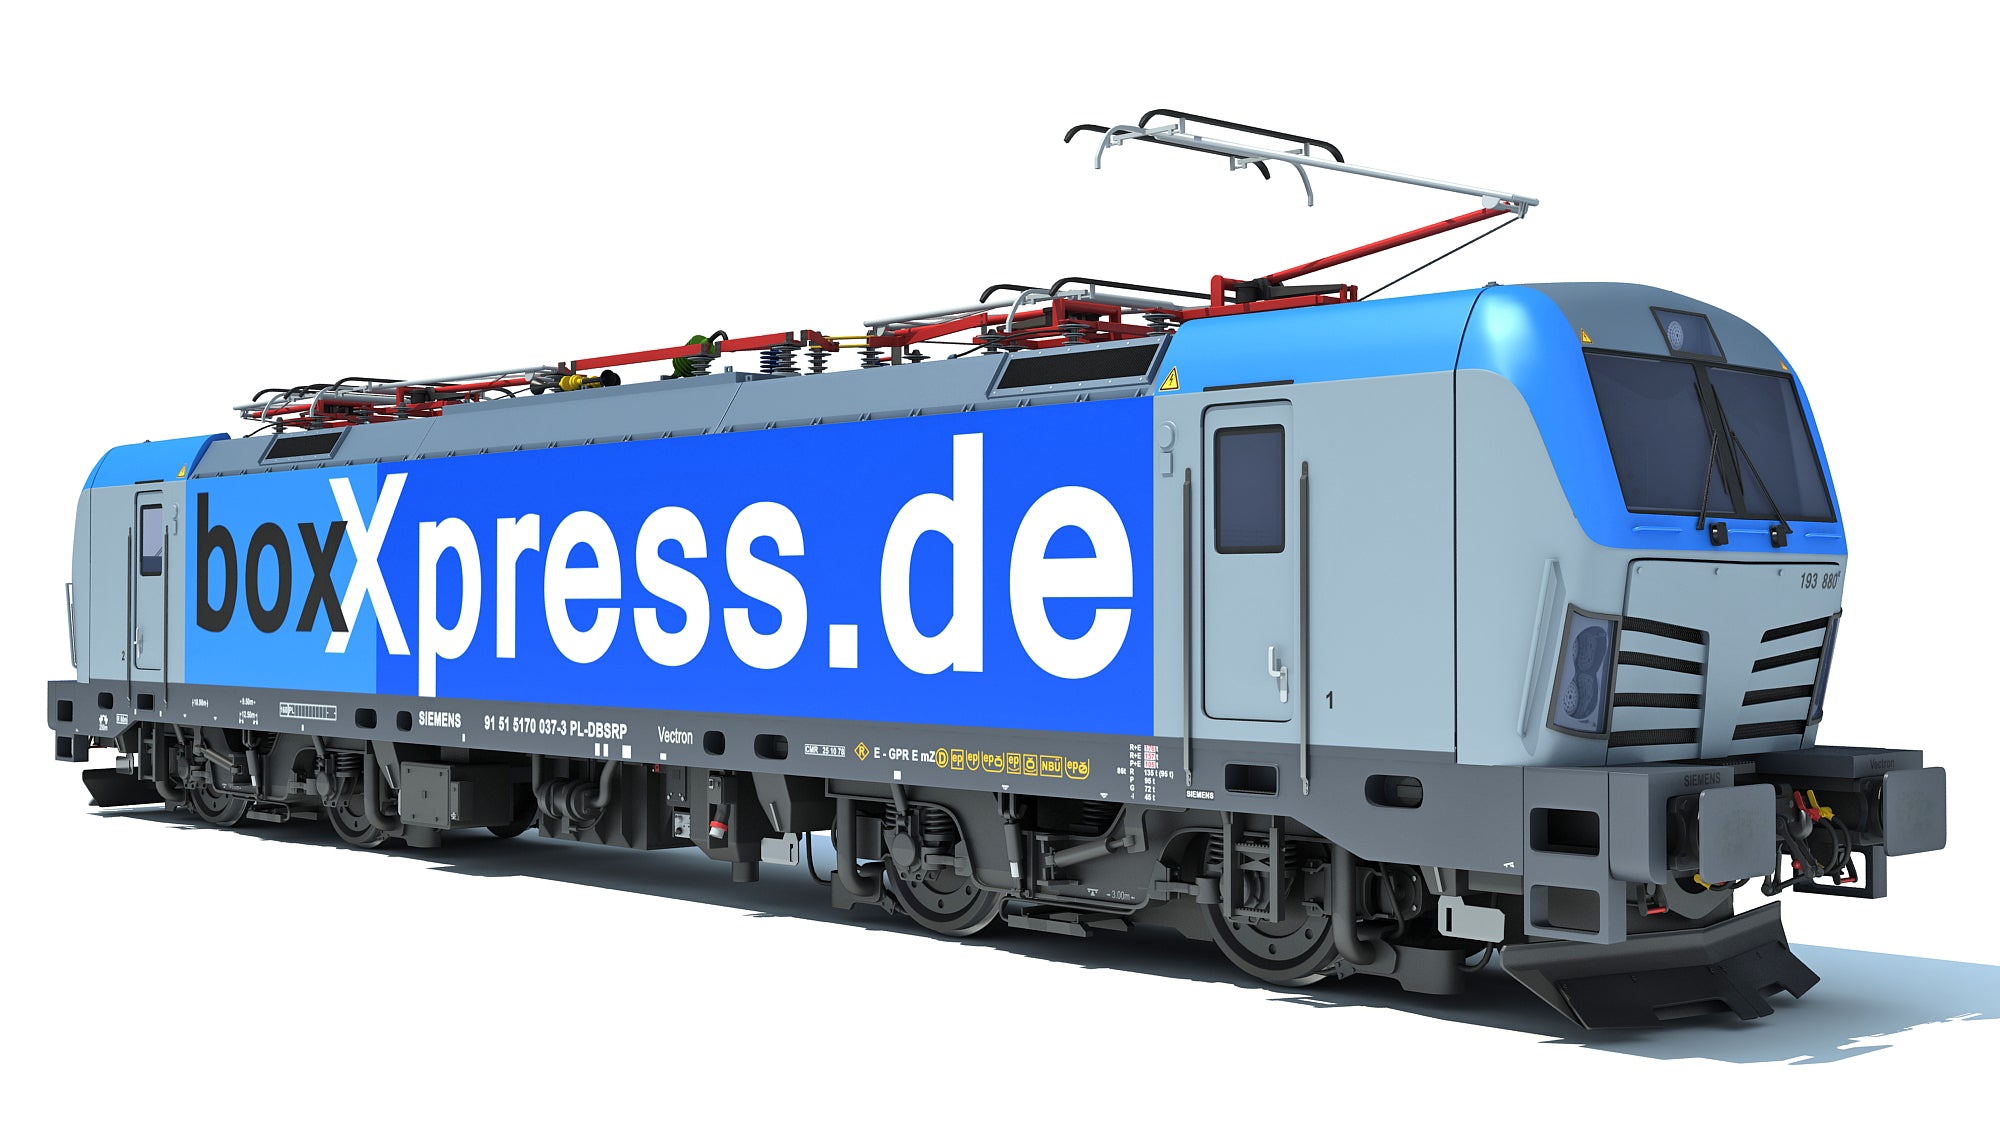 Siemens Vectron Locomotive boxXpress